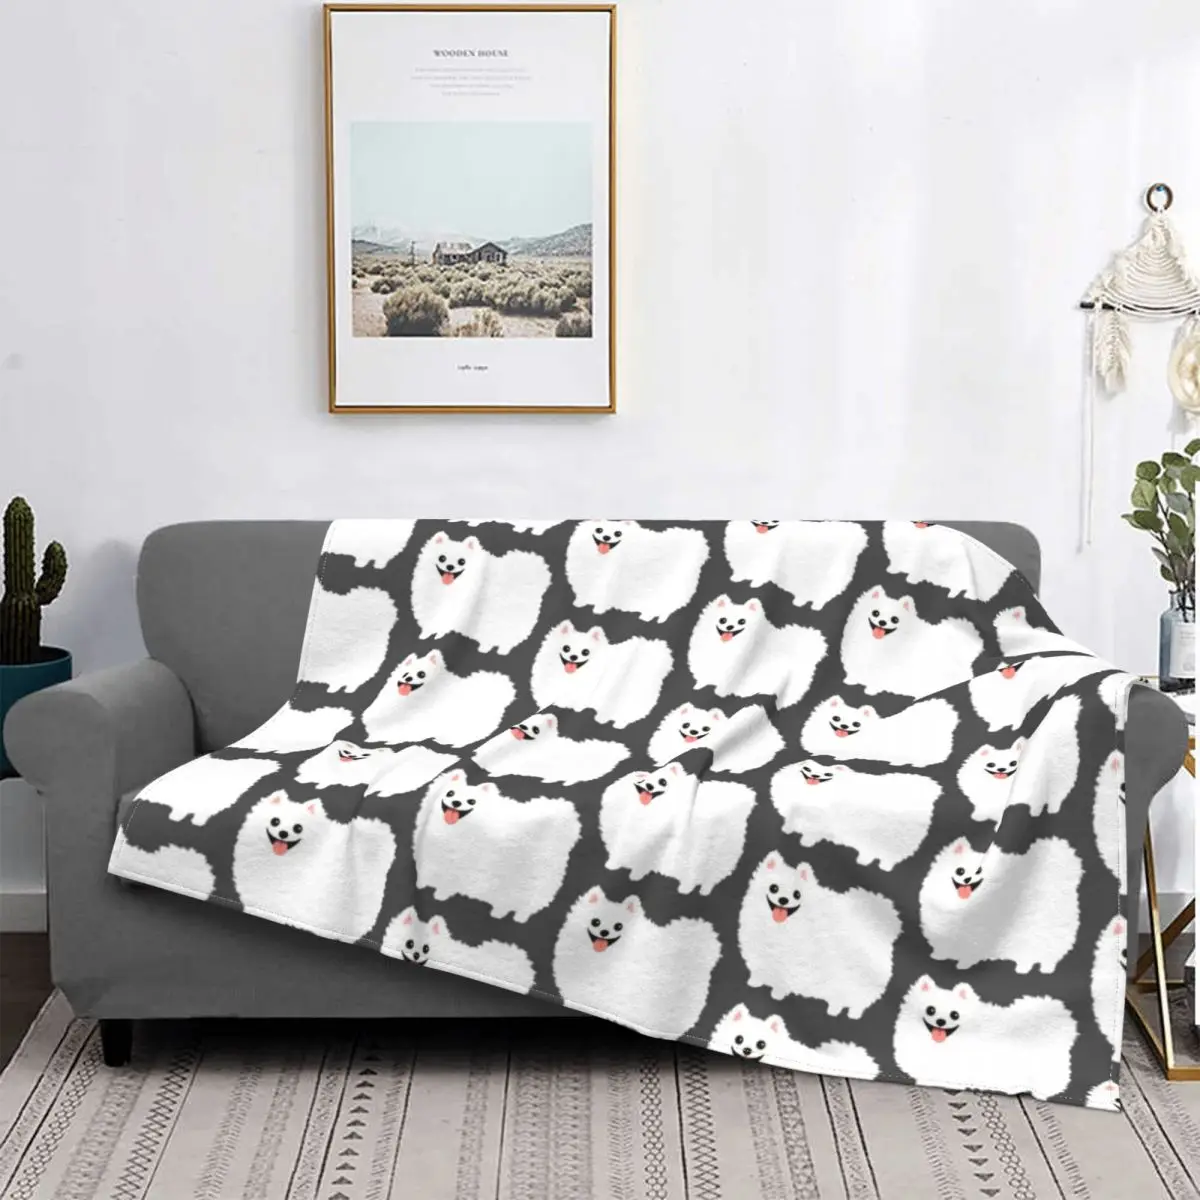 Fluffy White Pomeranian Blanket Dog Pet Puppy Animal Plush Warm Soft FlannelFleece Throw Blanket For Sofa BedSheet Cover Bedroom